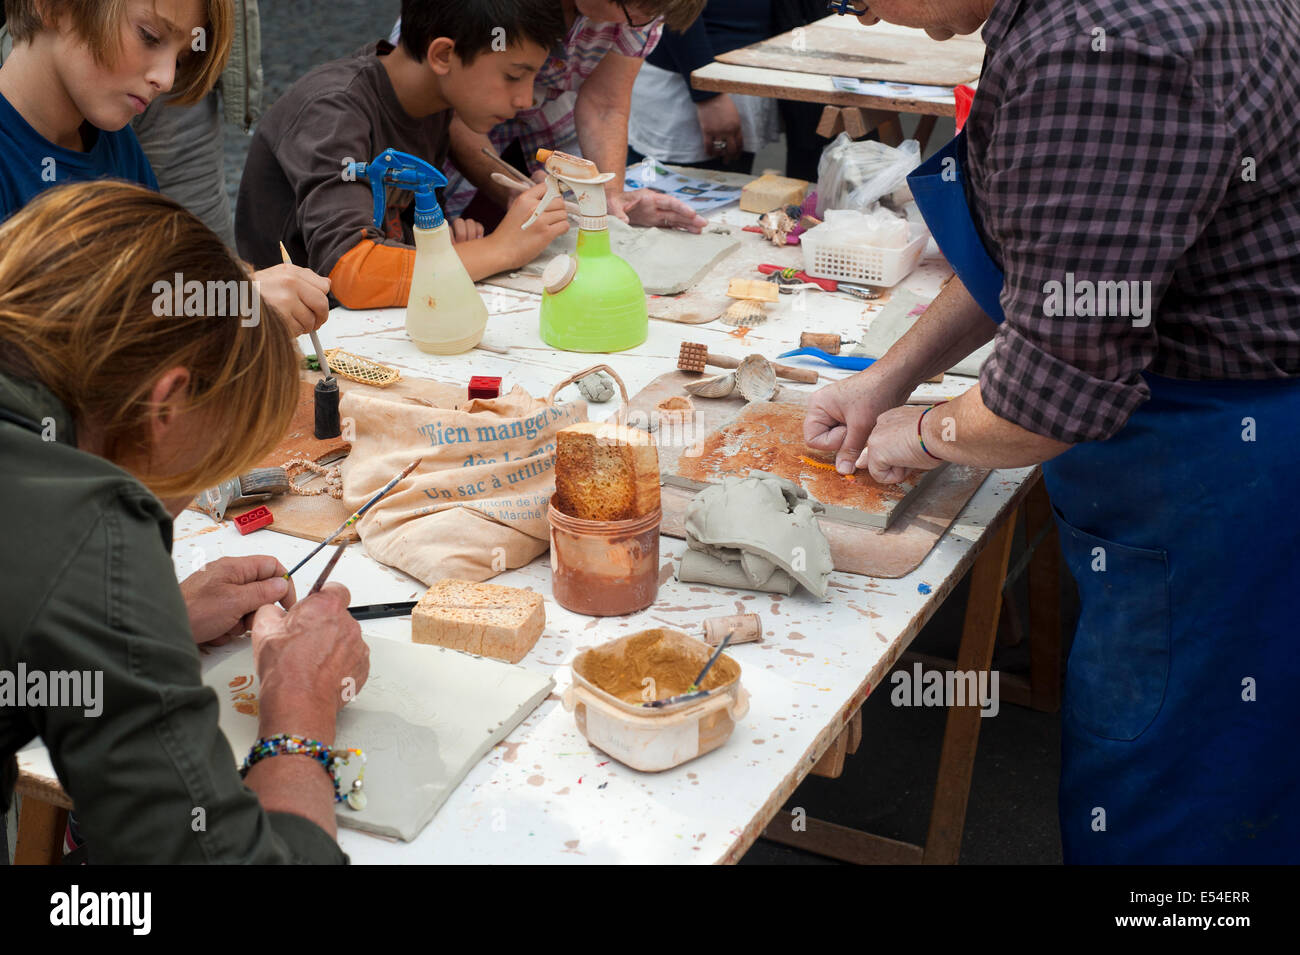 Paris France - Painting handicraft people Stock Photo